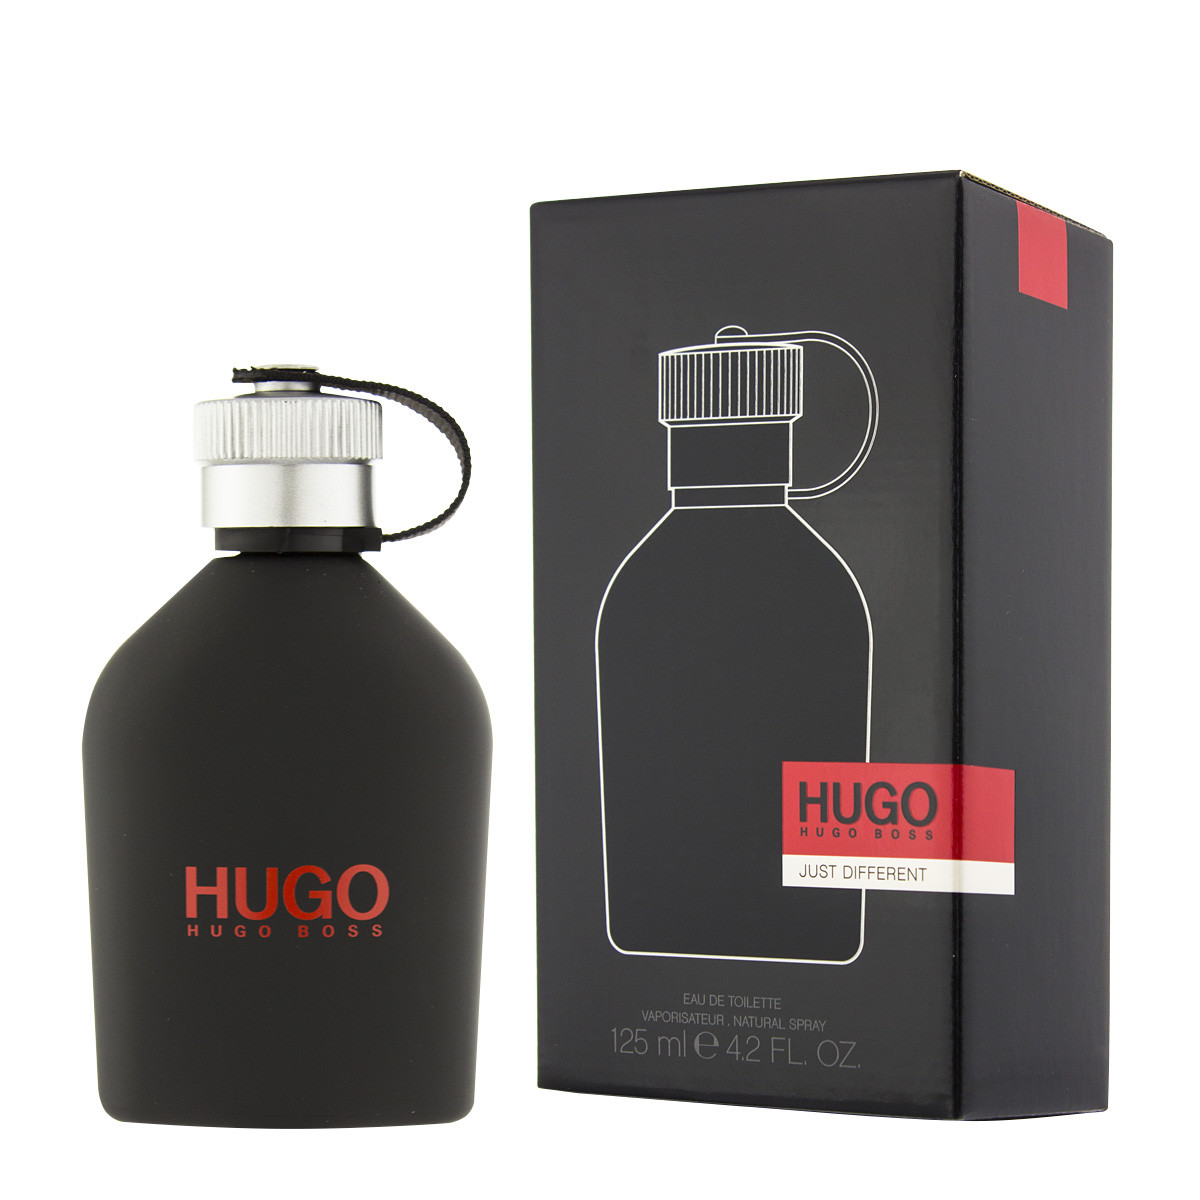 Hugo Boss "Just Different" 150 ml